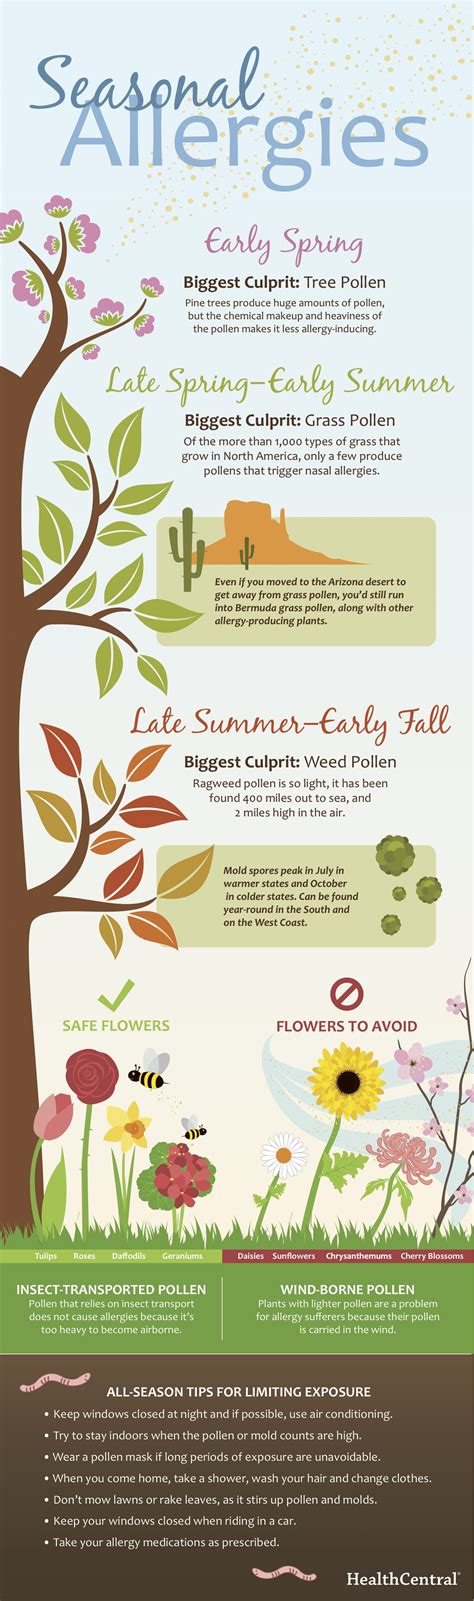 Andi Simons » Seasonal Allergies Infographic | Seasonal allergies, Infographic health, Allergies